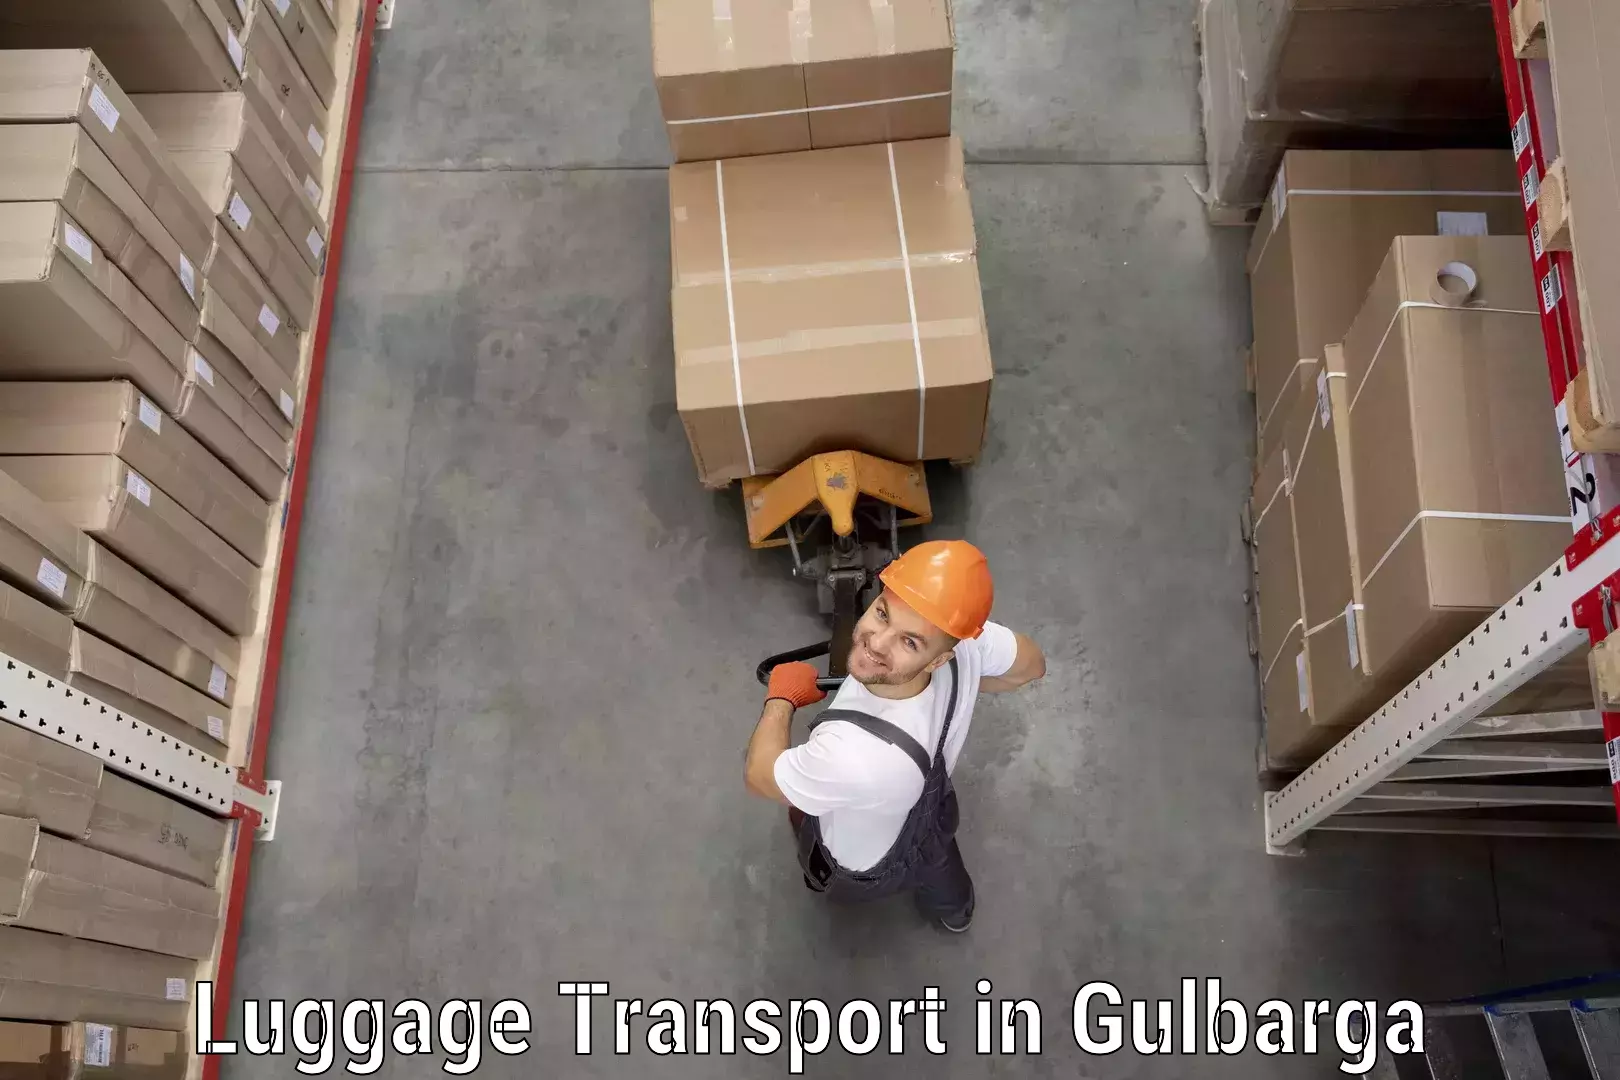 Professional baggage transport in Gulbarga